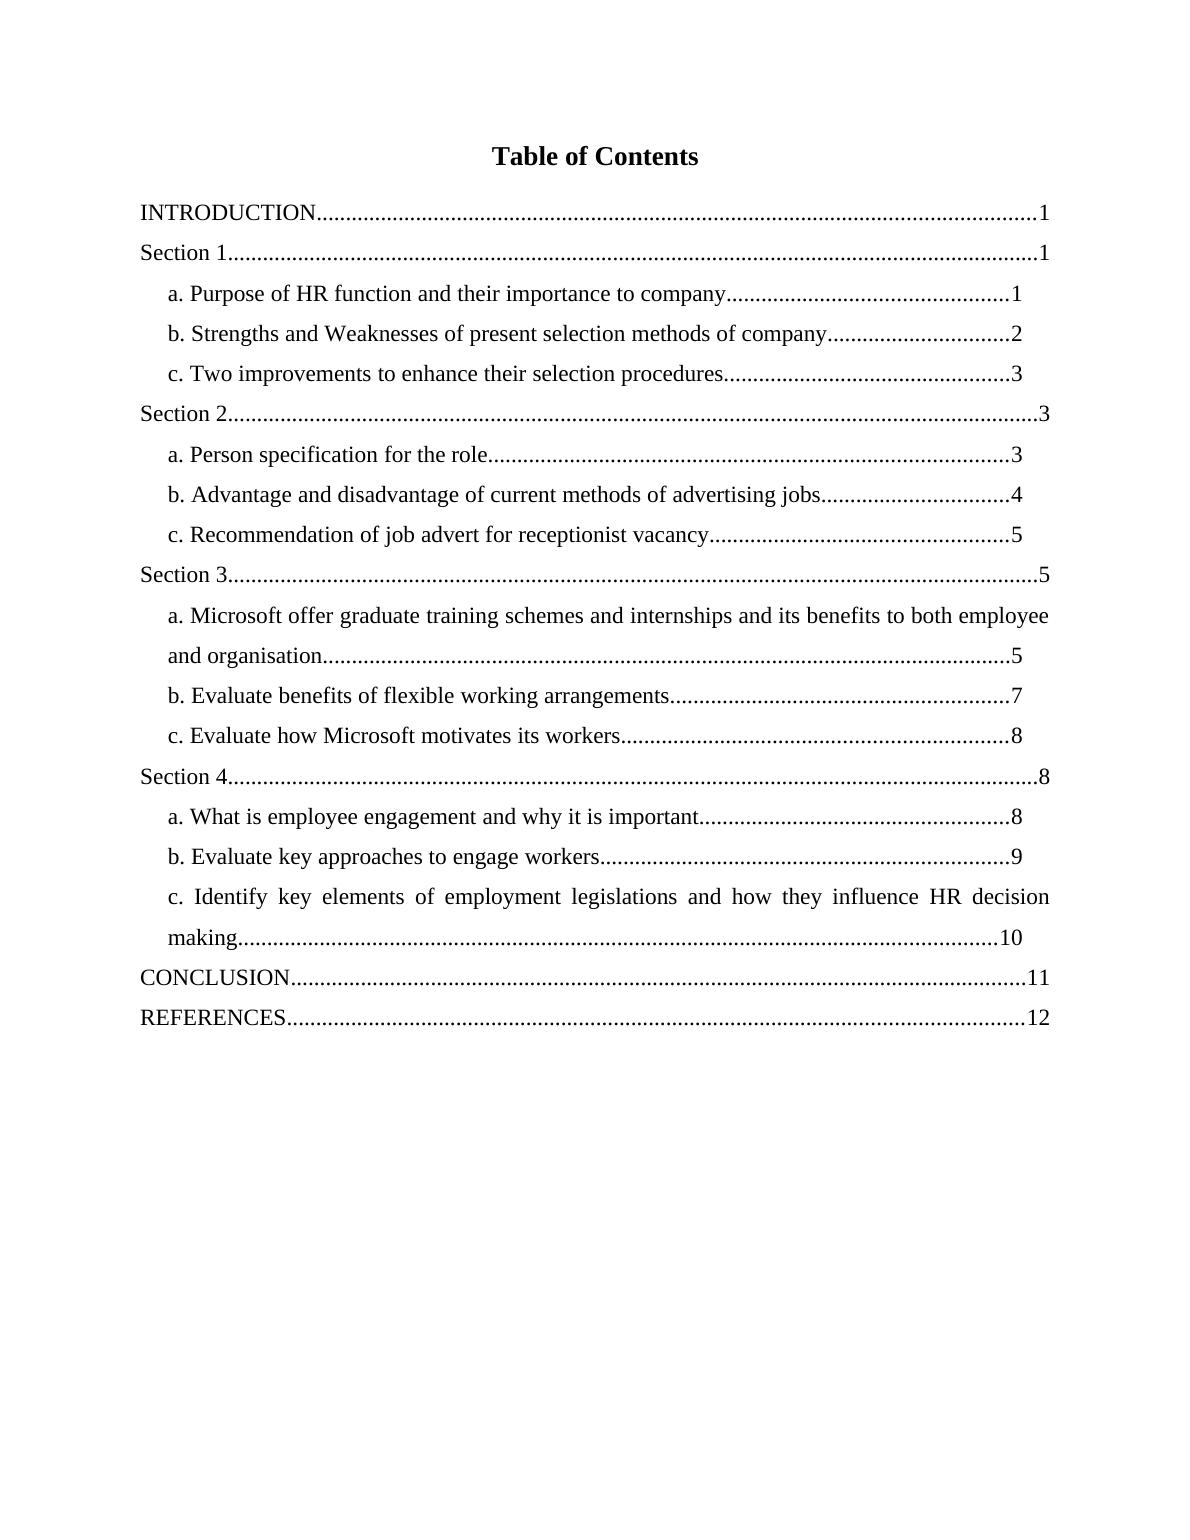 Human Resource Management Assignment PDF : Microsoft_2